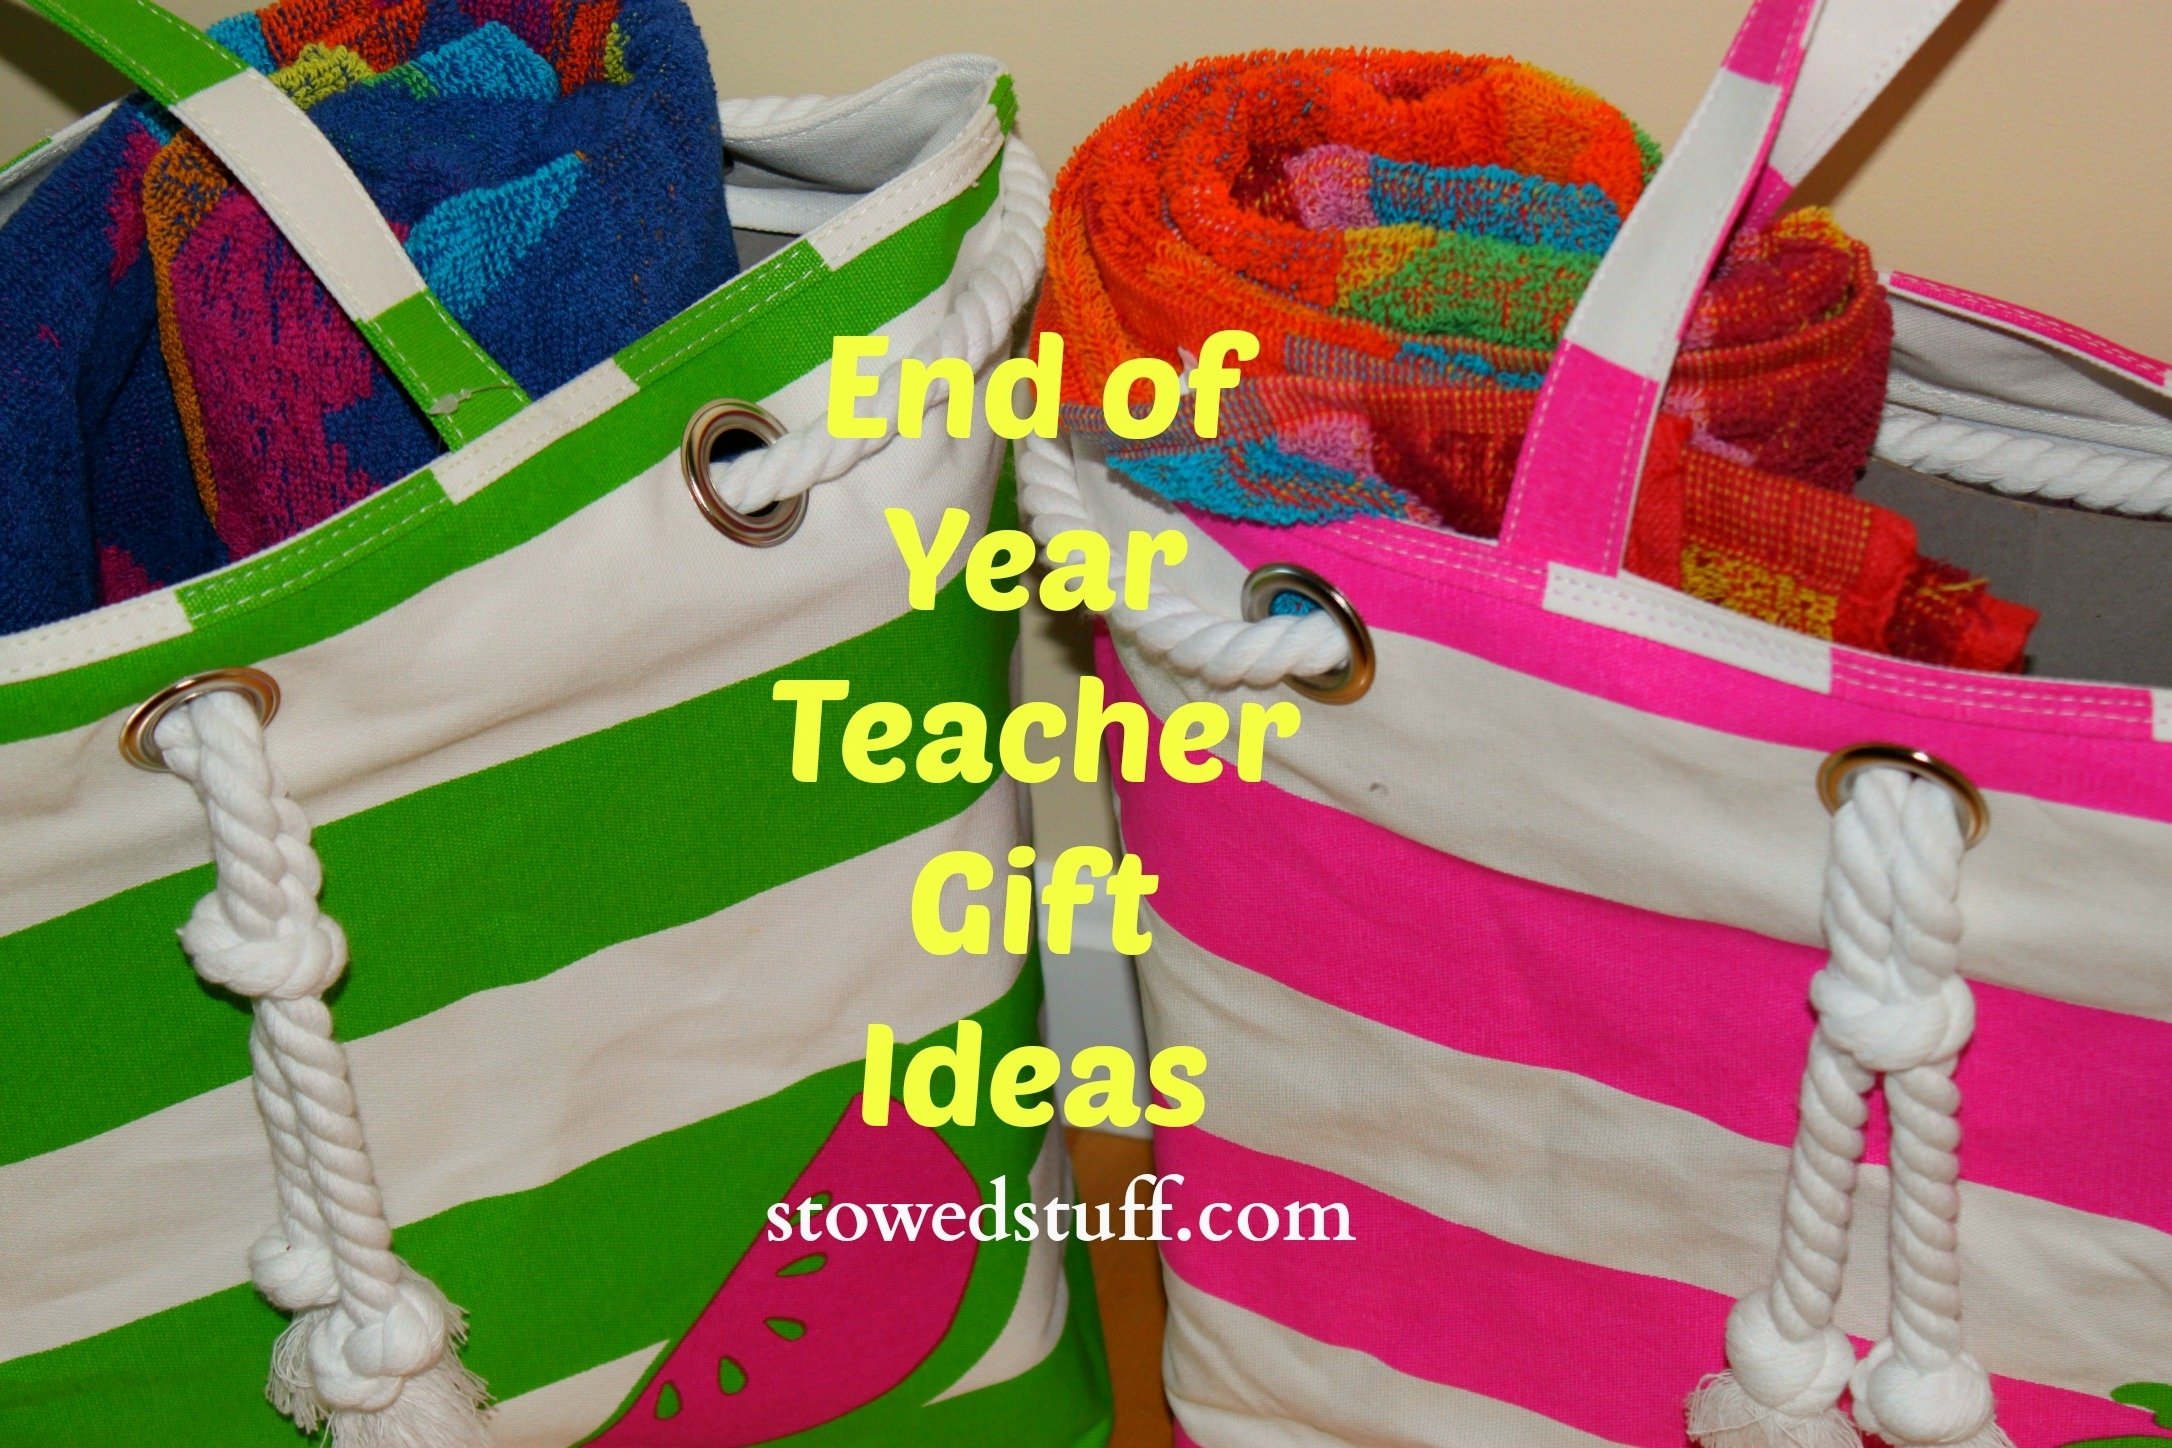 10 Stylish End Of The Year Teacher Gift Ideas what to get teachers at the end of the school year stowed stuff 1 2022